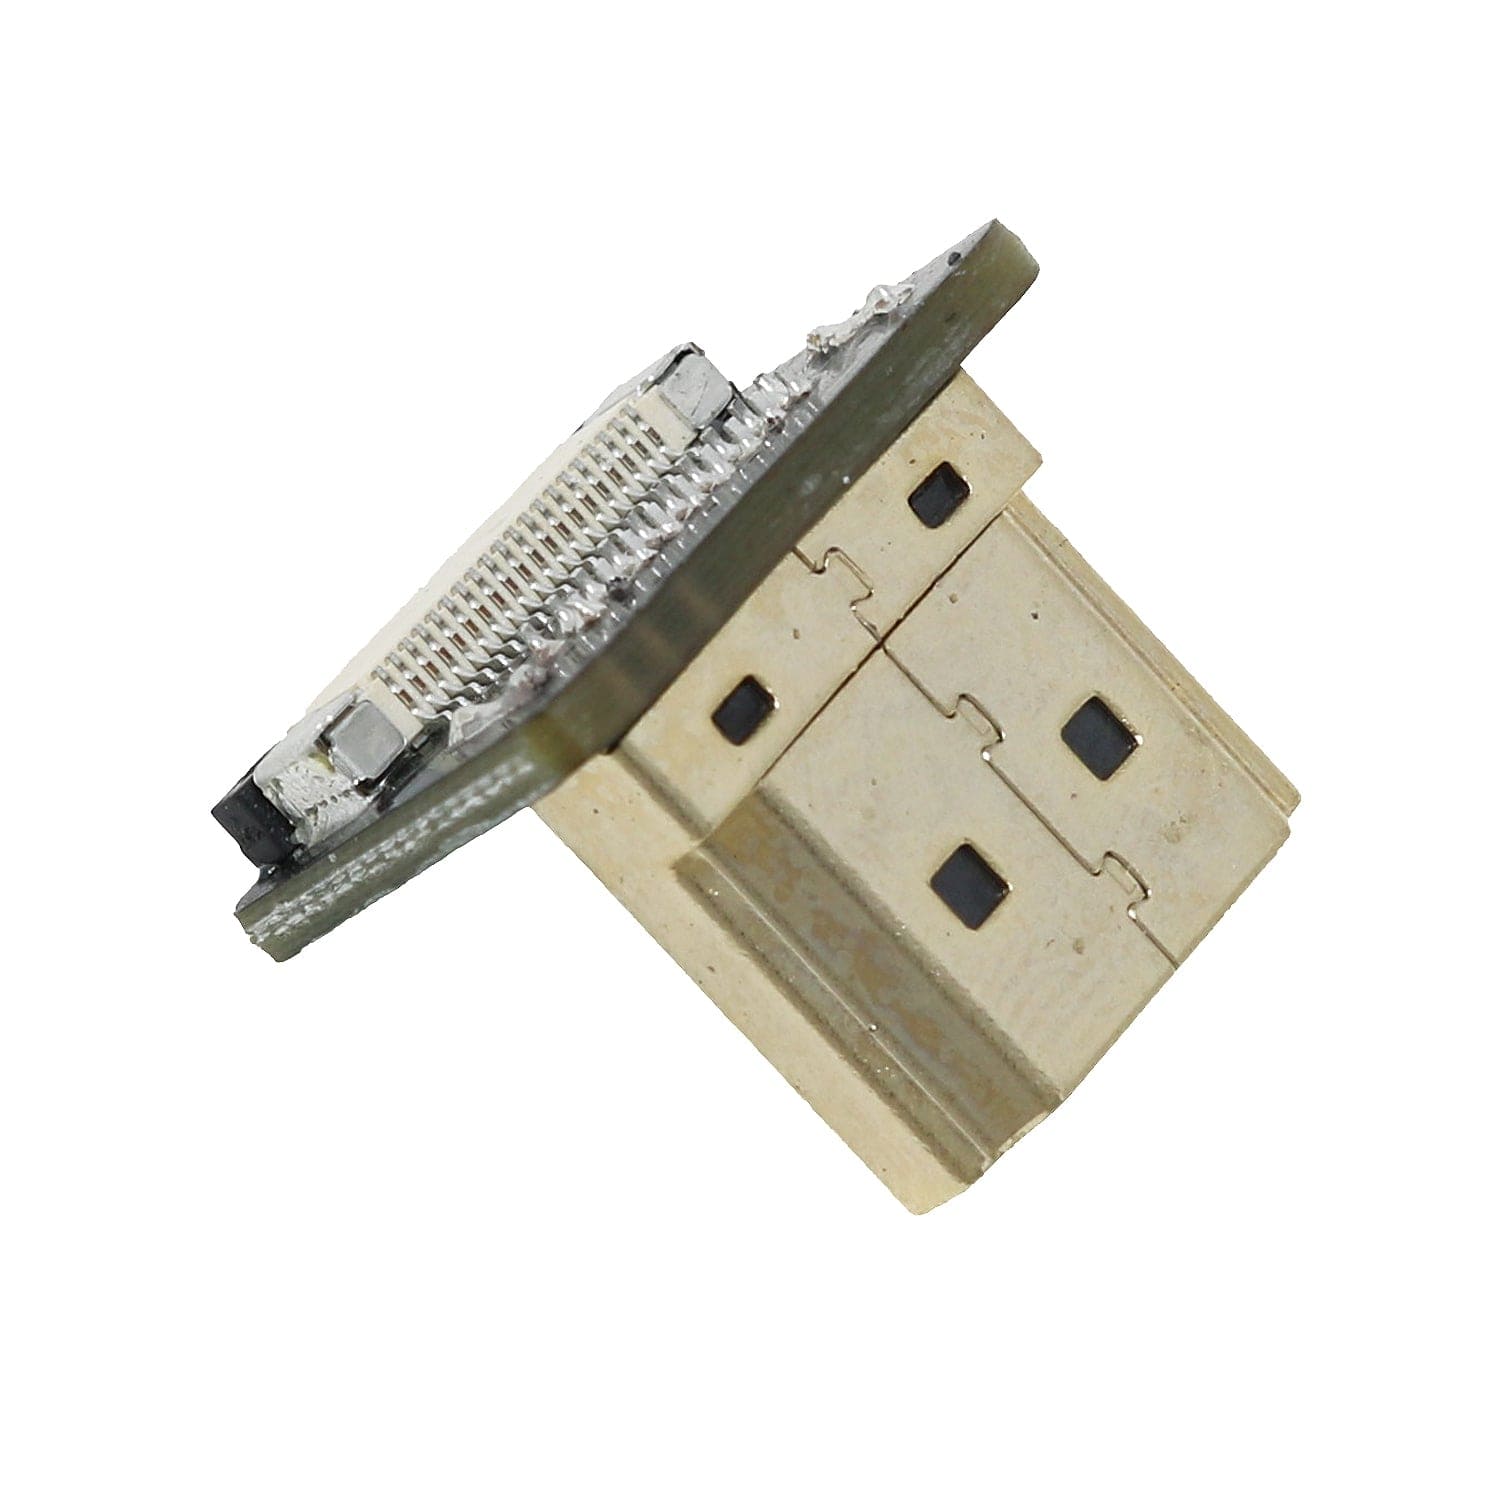 DIY HDMI Cable Parts - Right Angle (R bend) HDMI Plug Adapter - The Pi Hut